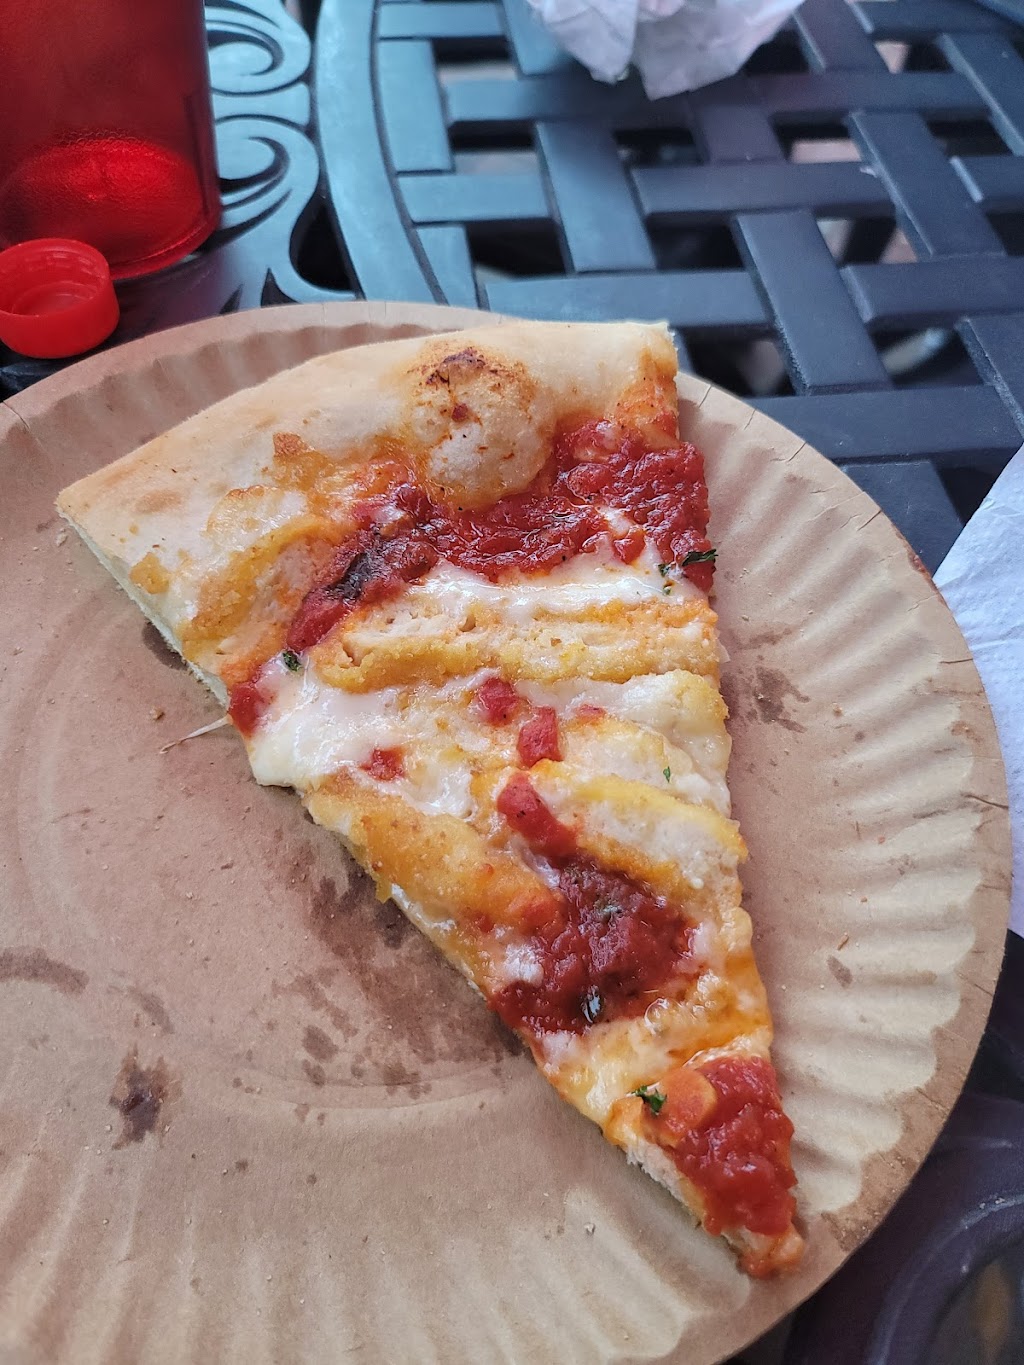 New York Pizza and Italian Restaurant | 57 Main St #2, Chester, NJ 07930 | Phone: (908) 879-4424